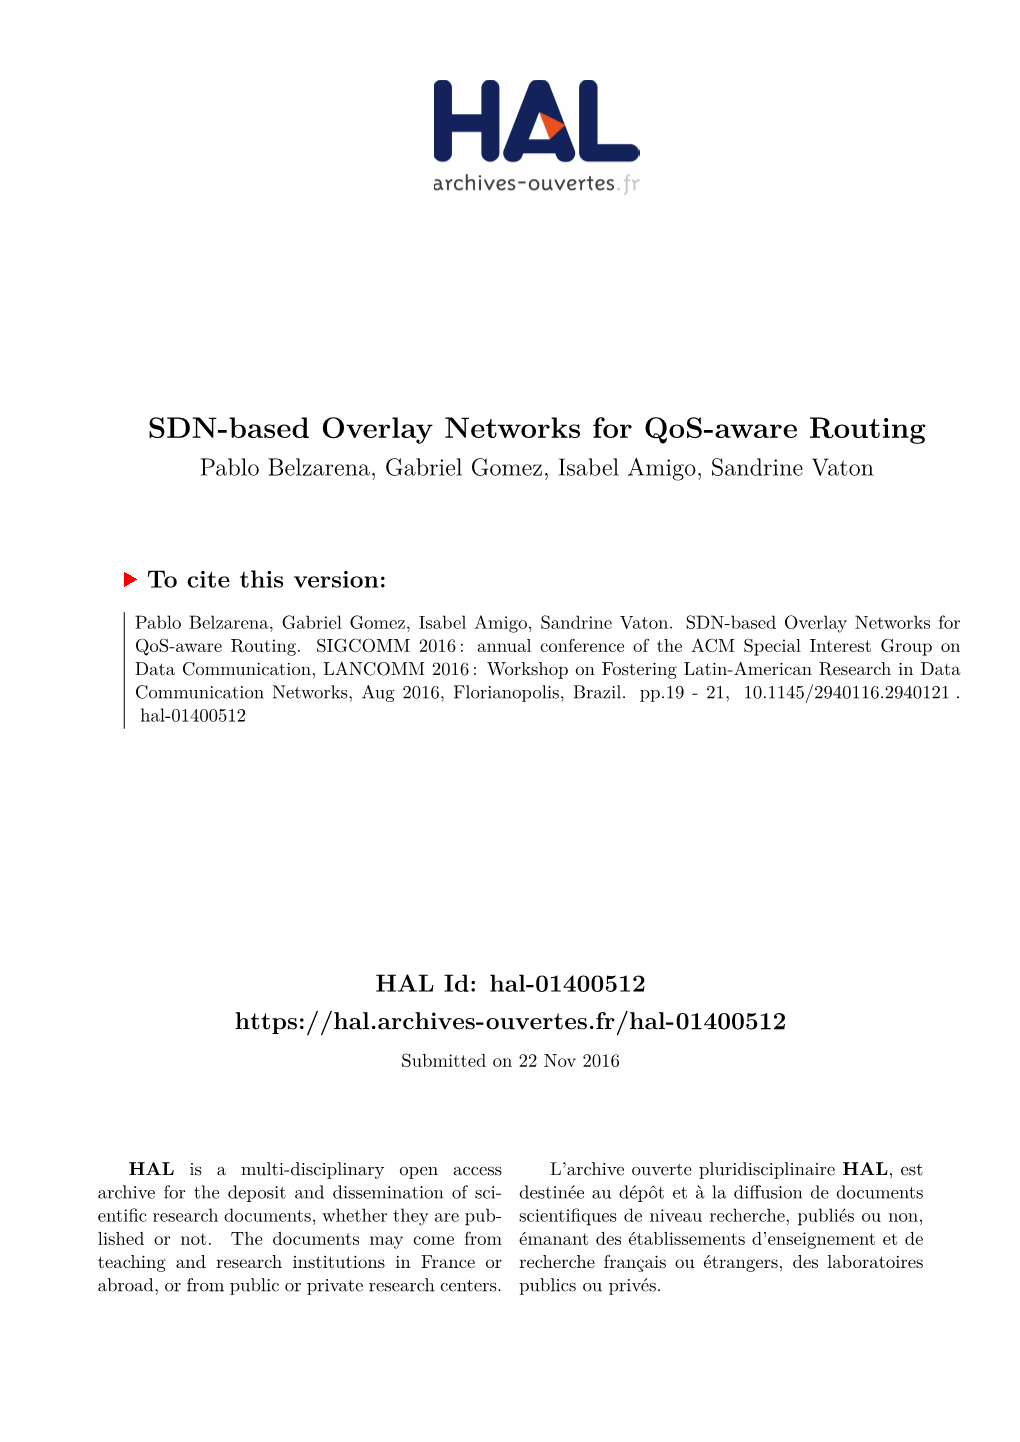 SDN-Based Overlay Networks for Qos-Aware Routing Pablo Belzarena, Gabriel Gomez, Isabel Amigo, Sandrine Vaton